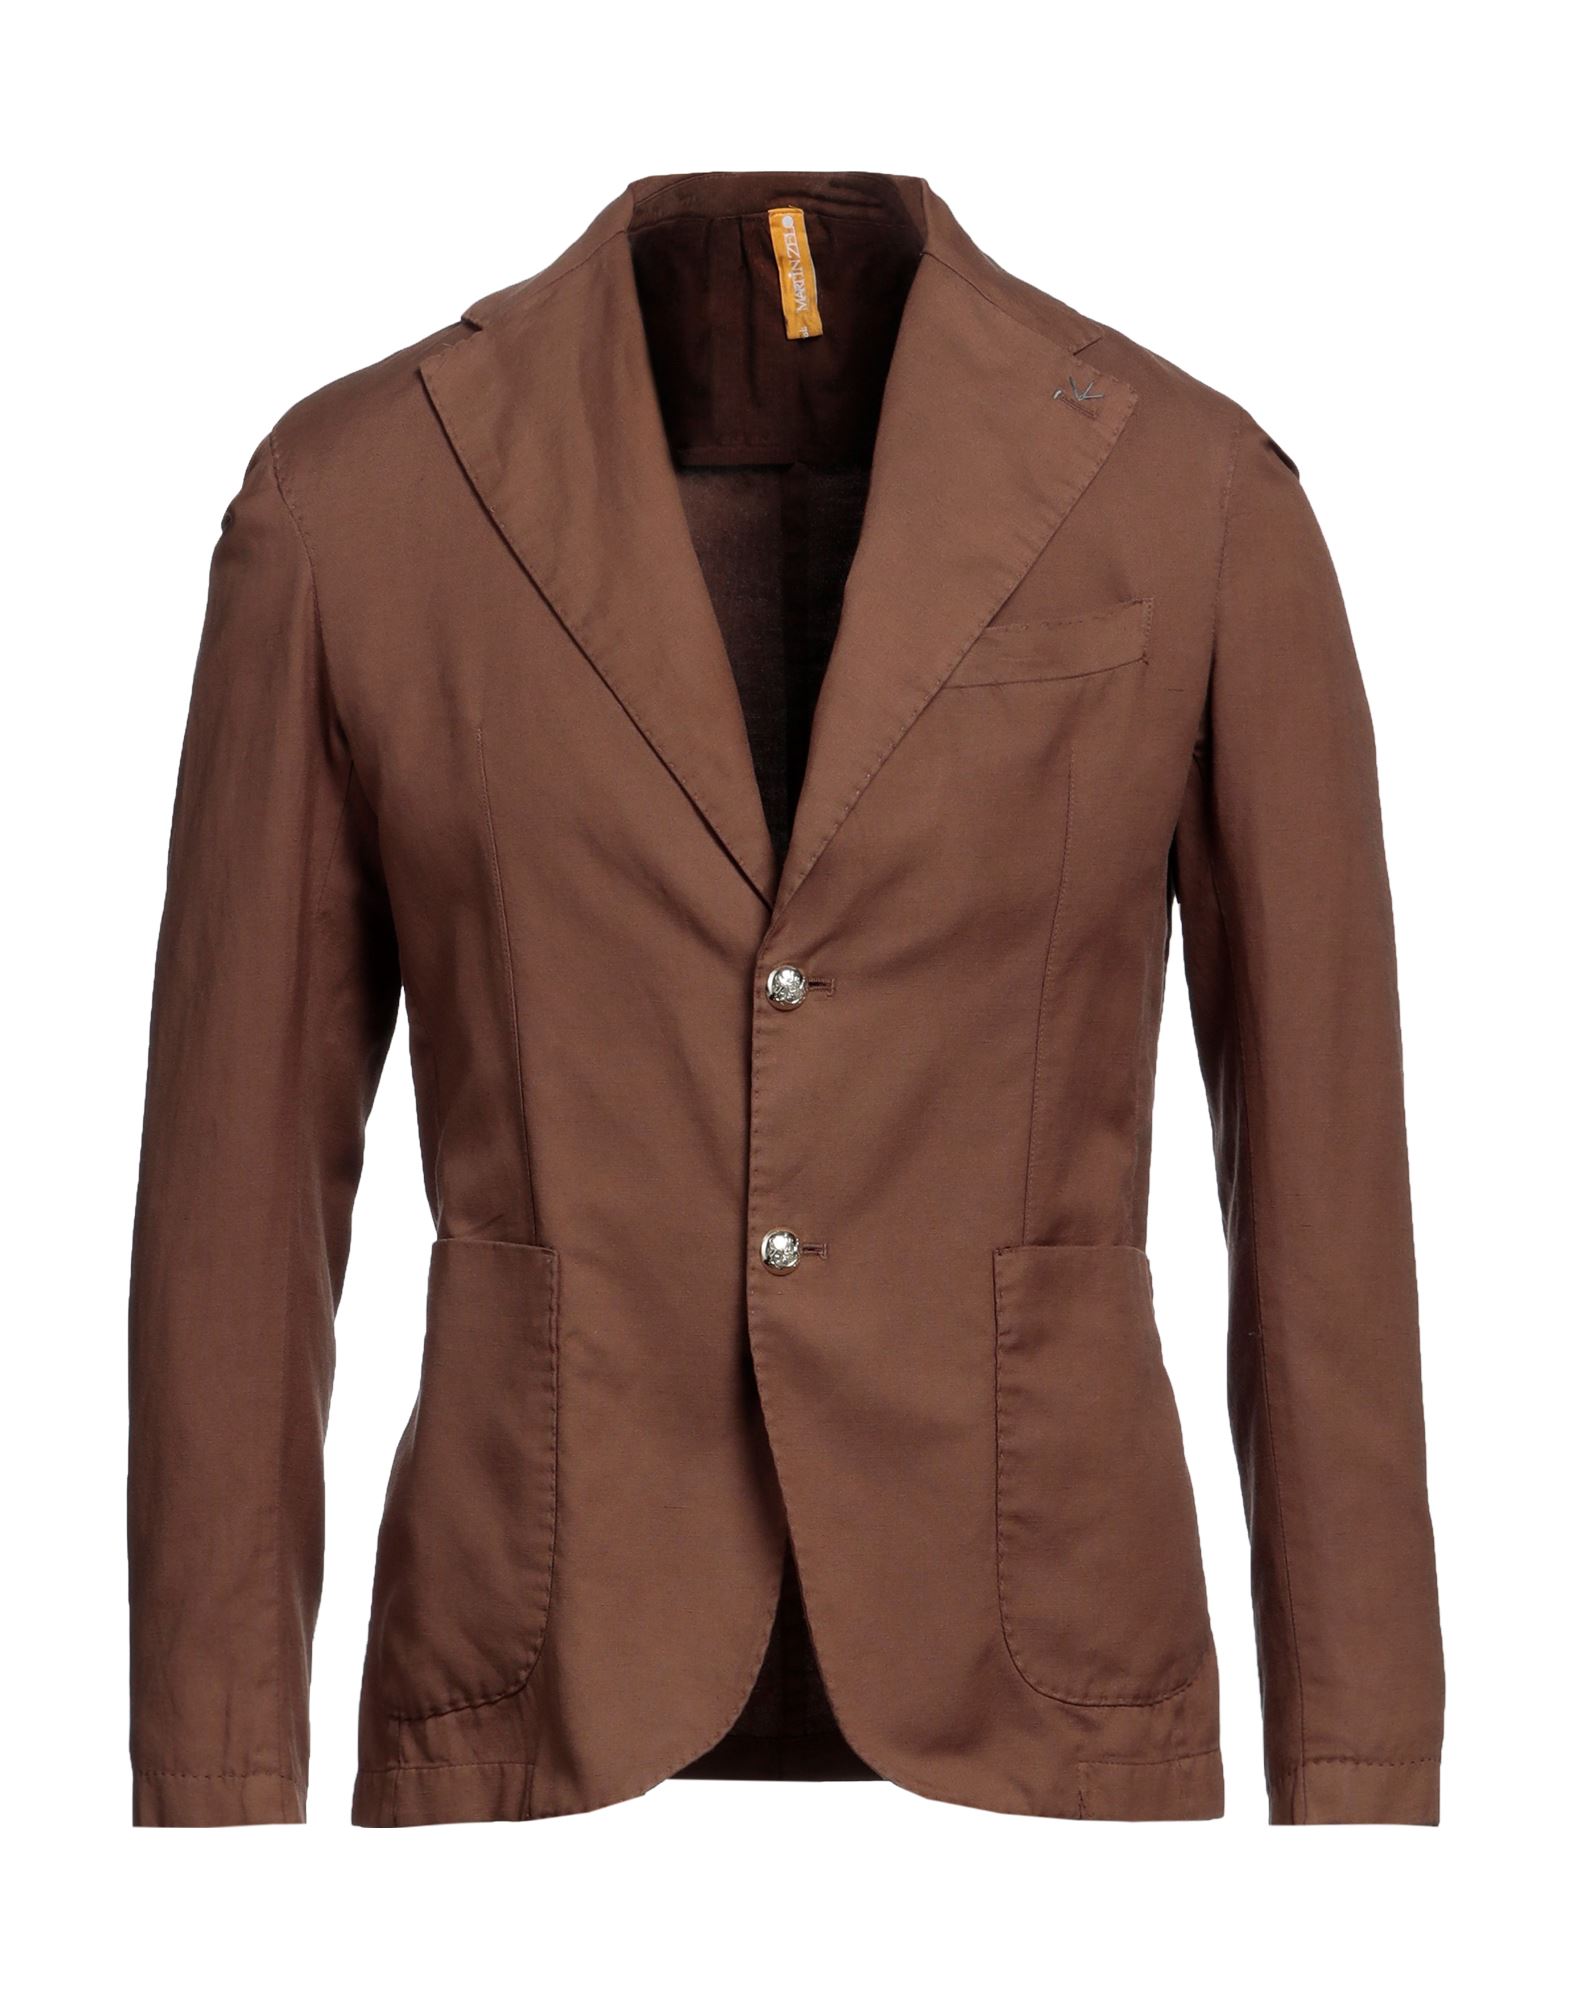 MARTIN ZELO Suit jackets